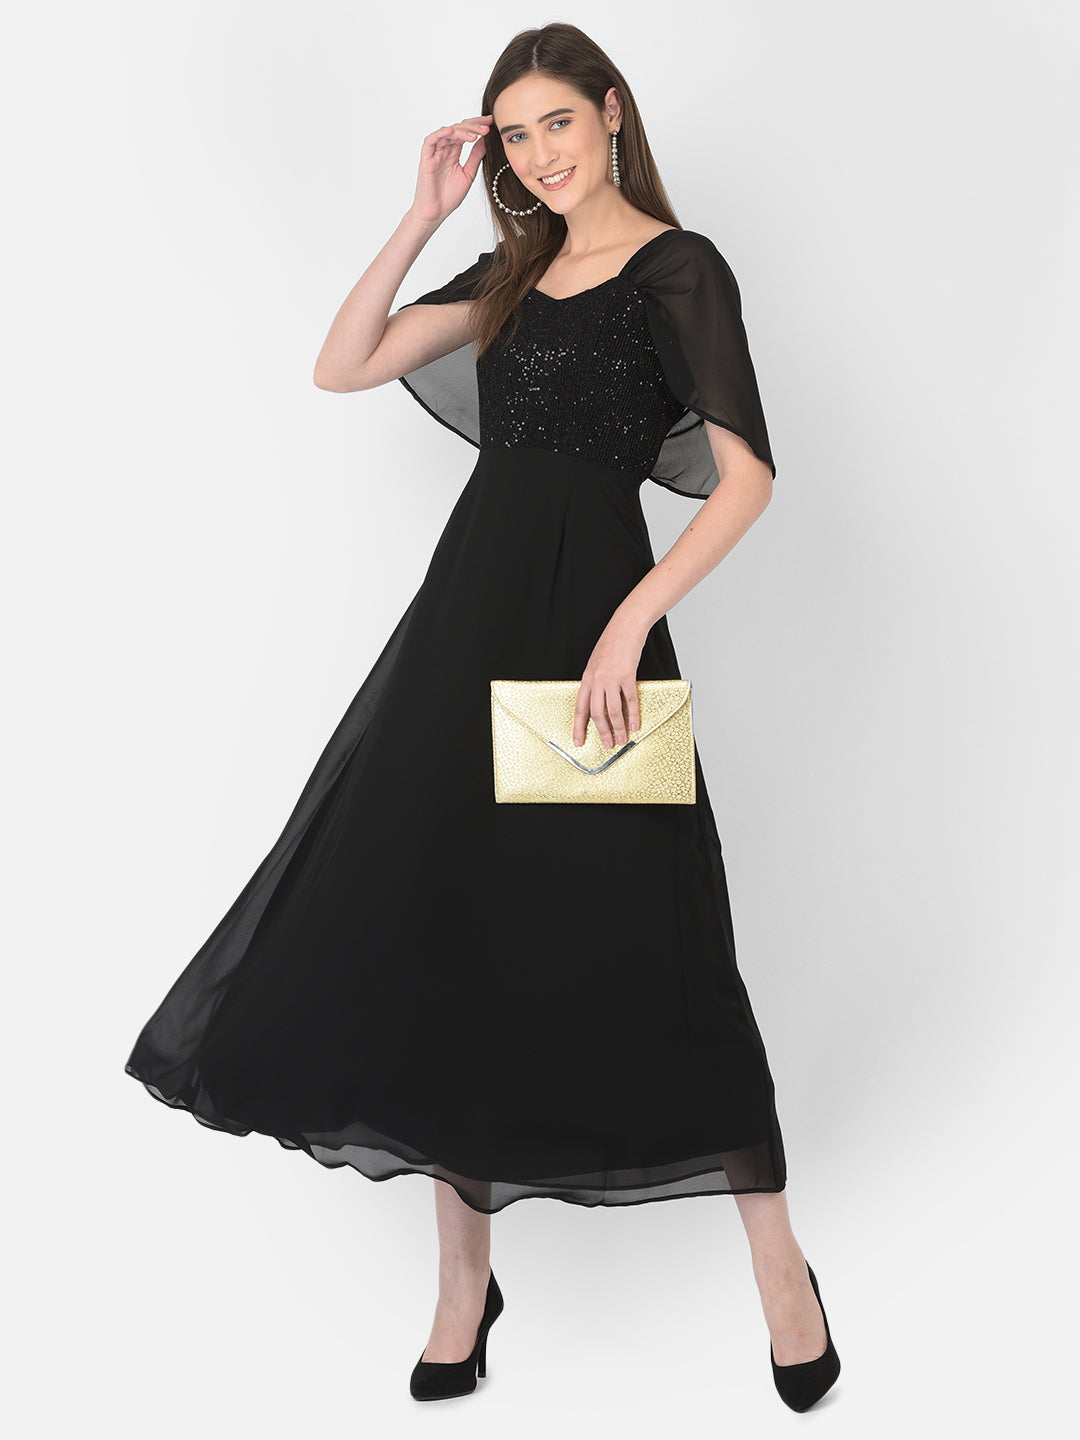 Black Half Sleeve Maxi With Solid Dress